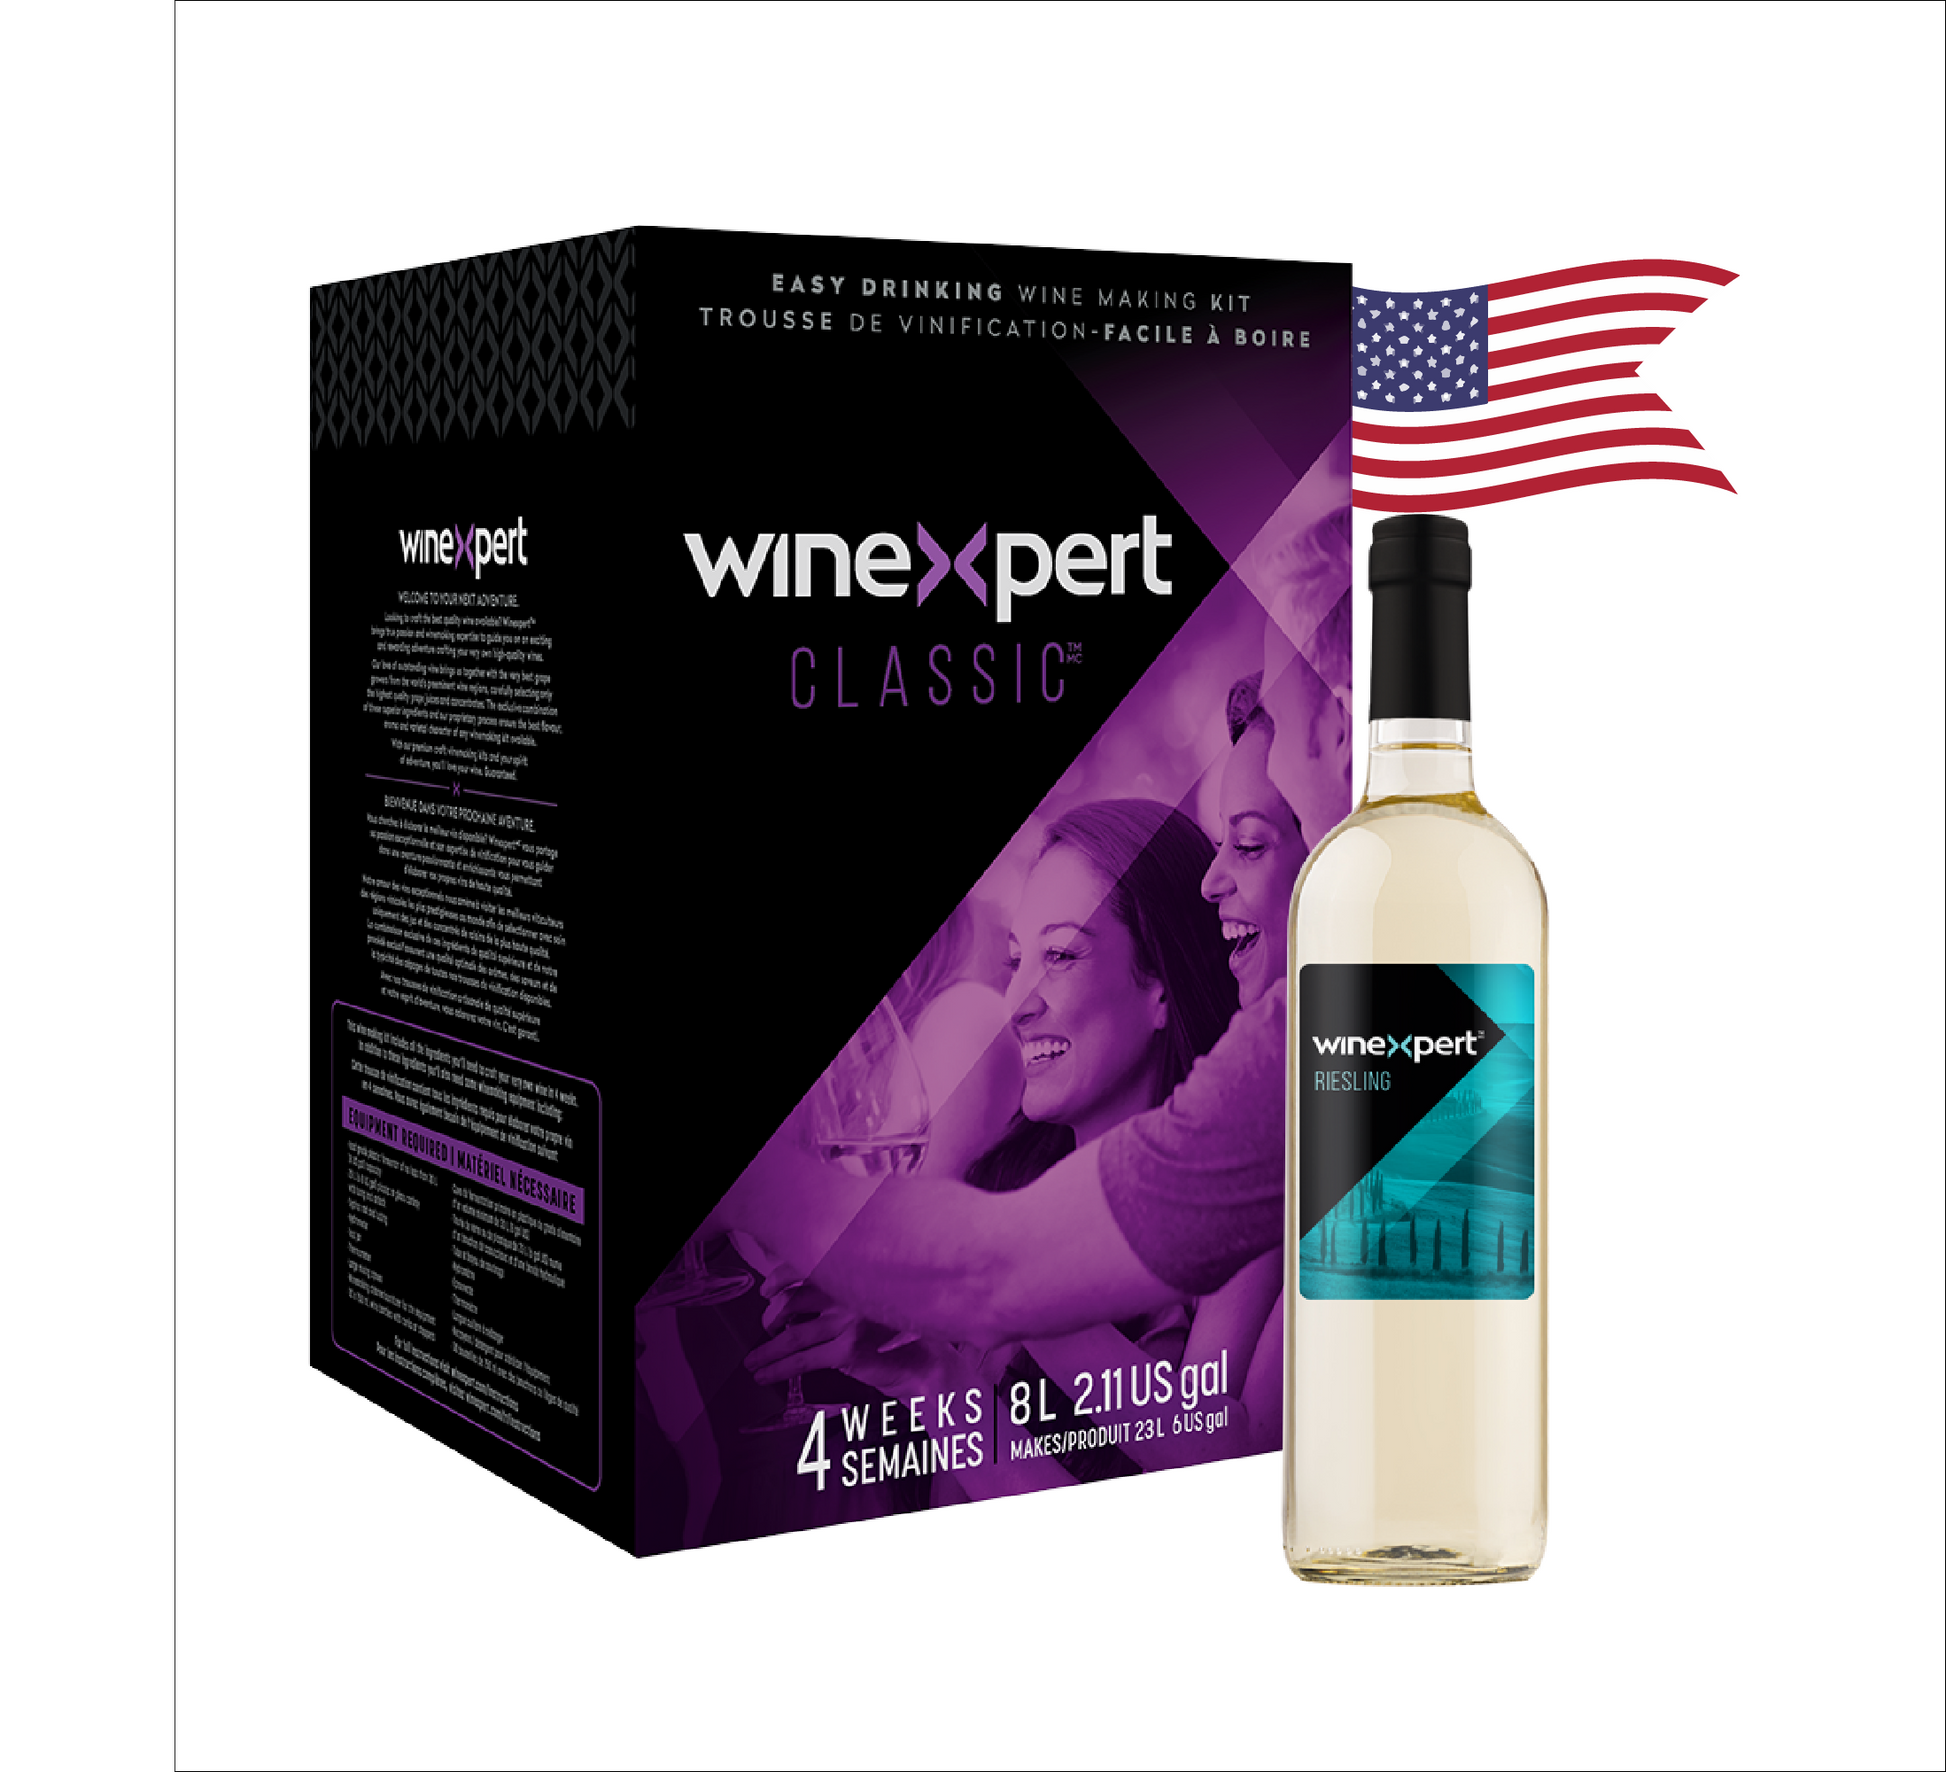 Winexpert Classic Riesling - Washington